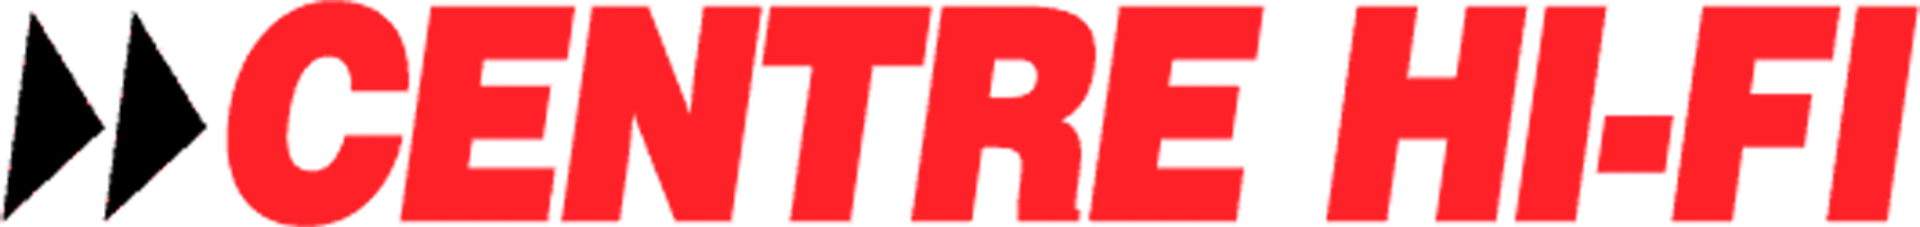 CENTRE HI-FI logo